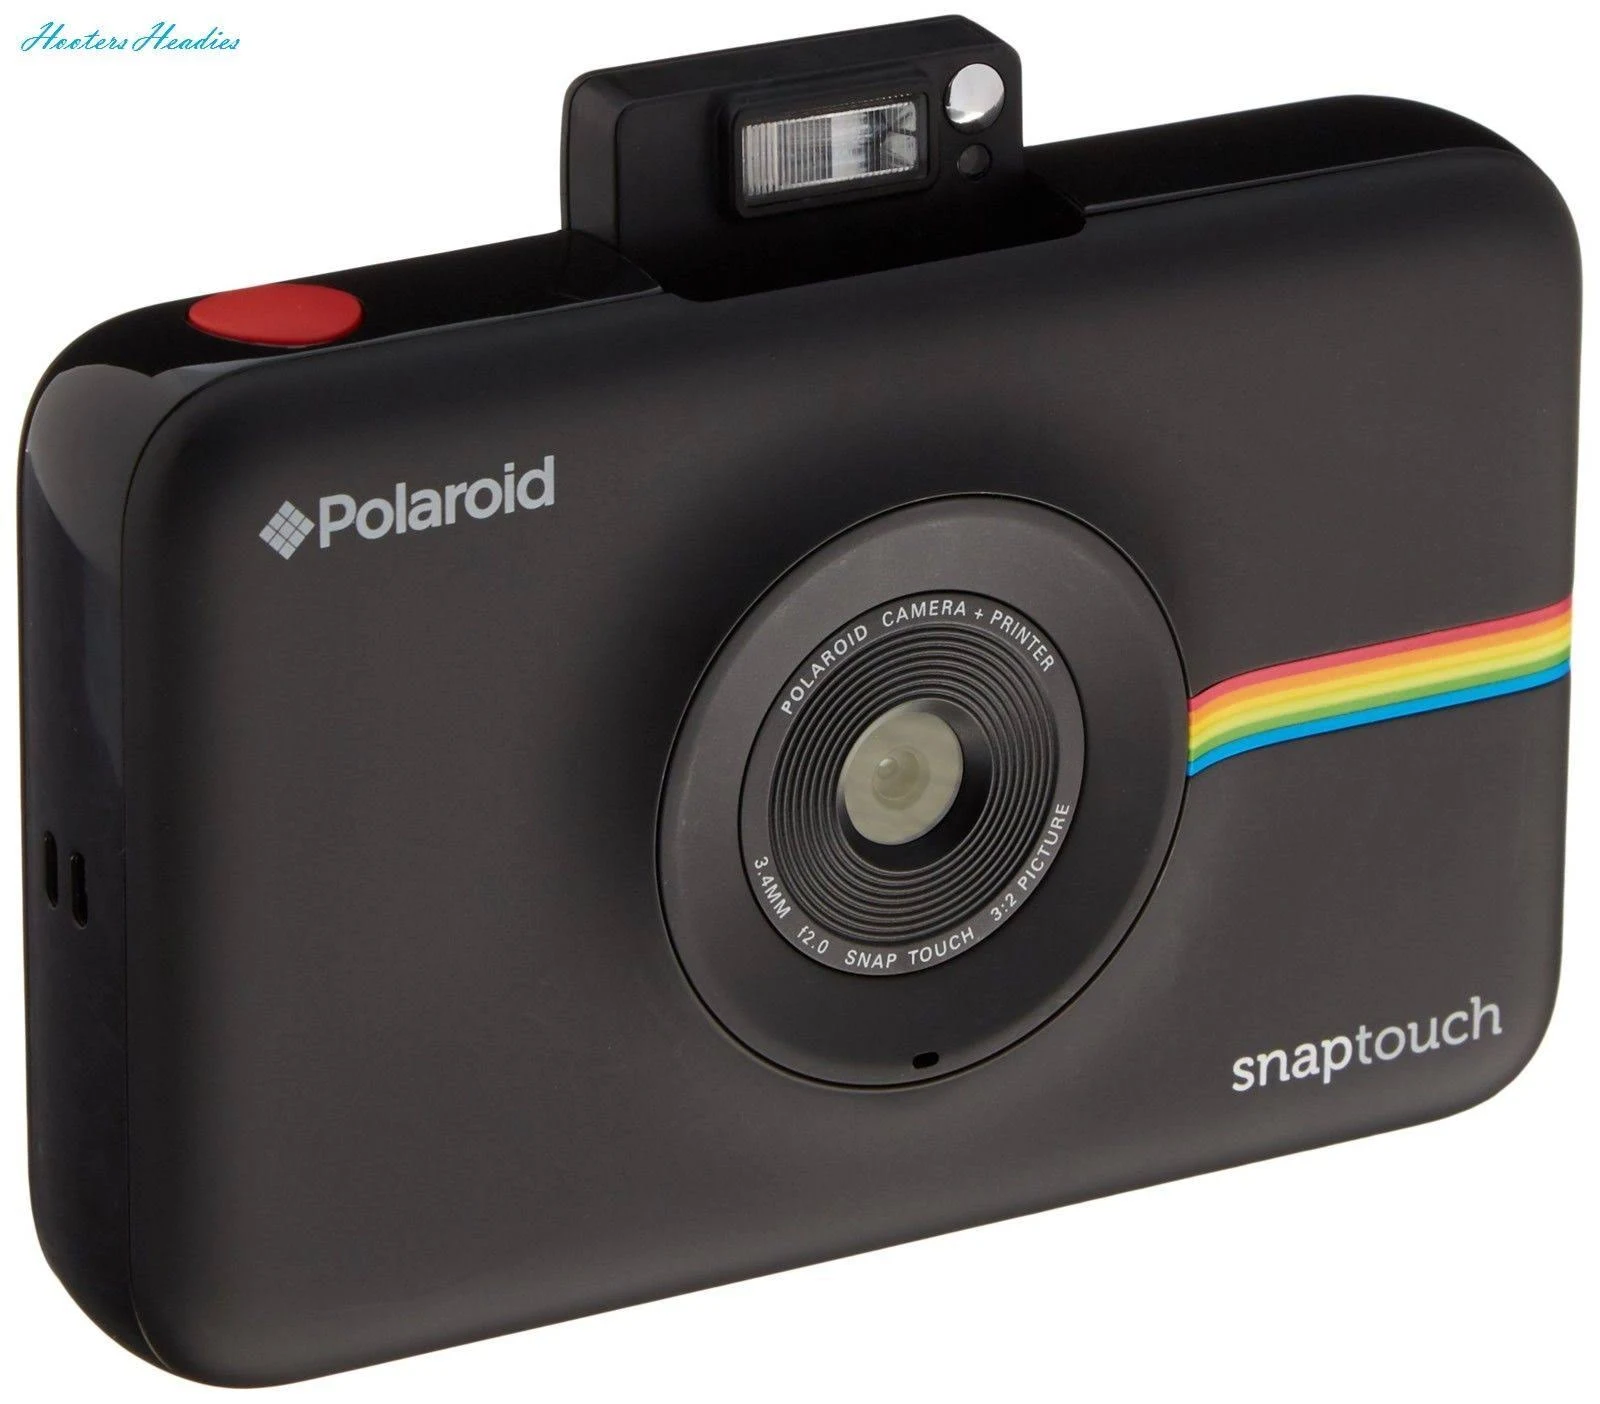 Polaroid Câmera digital Snap Touch Instant Print com display LCD (preto) com tecnologia de impressão Zink Zero Ink